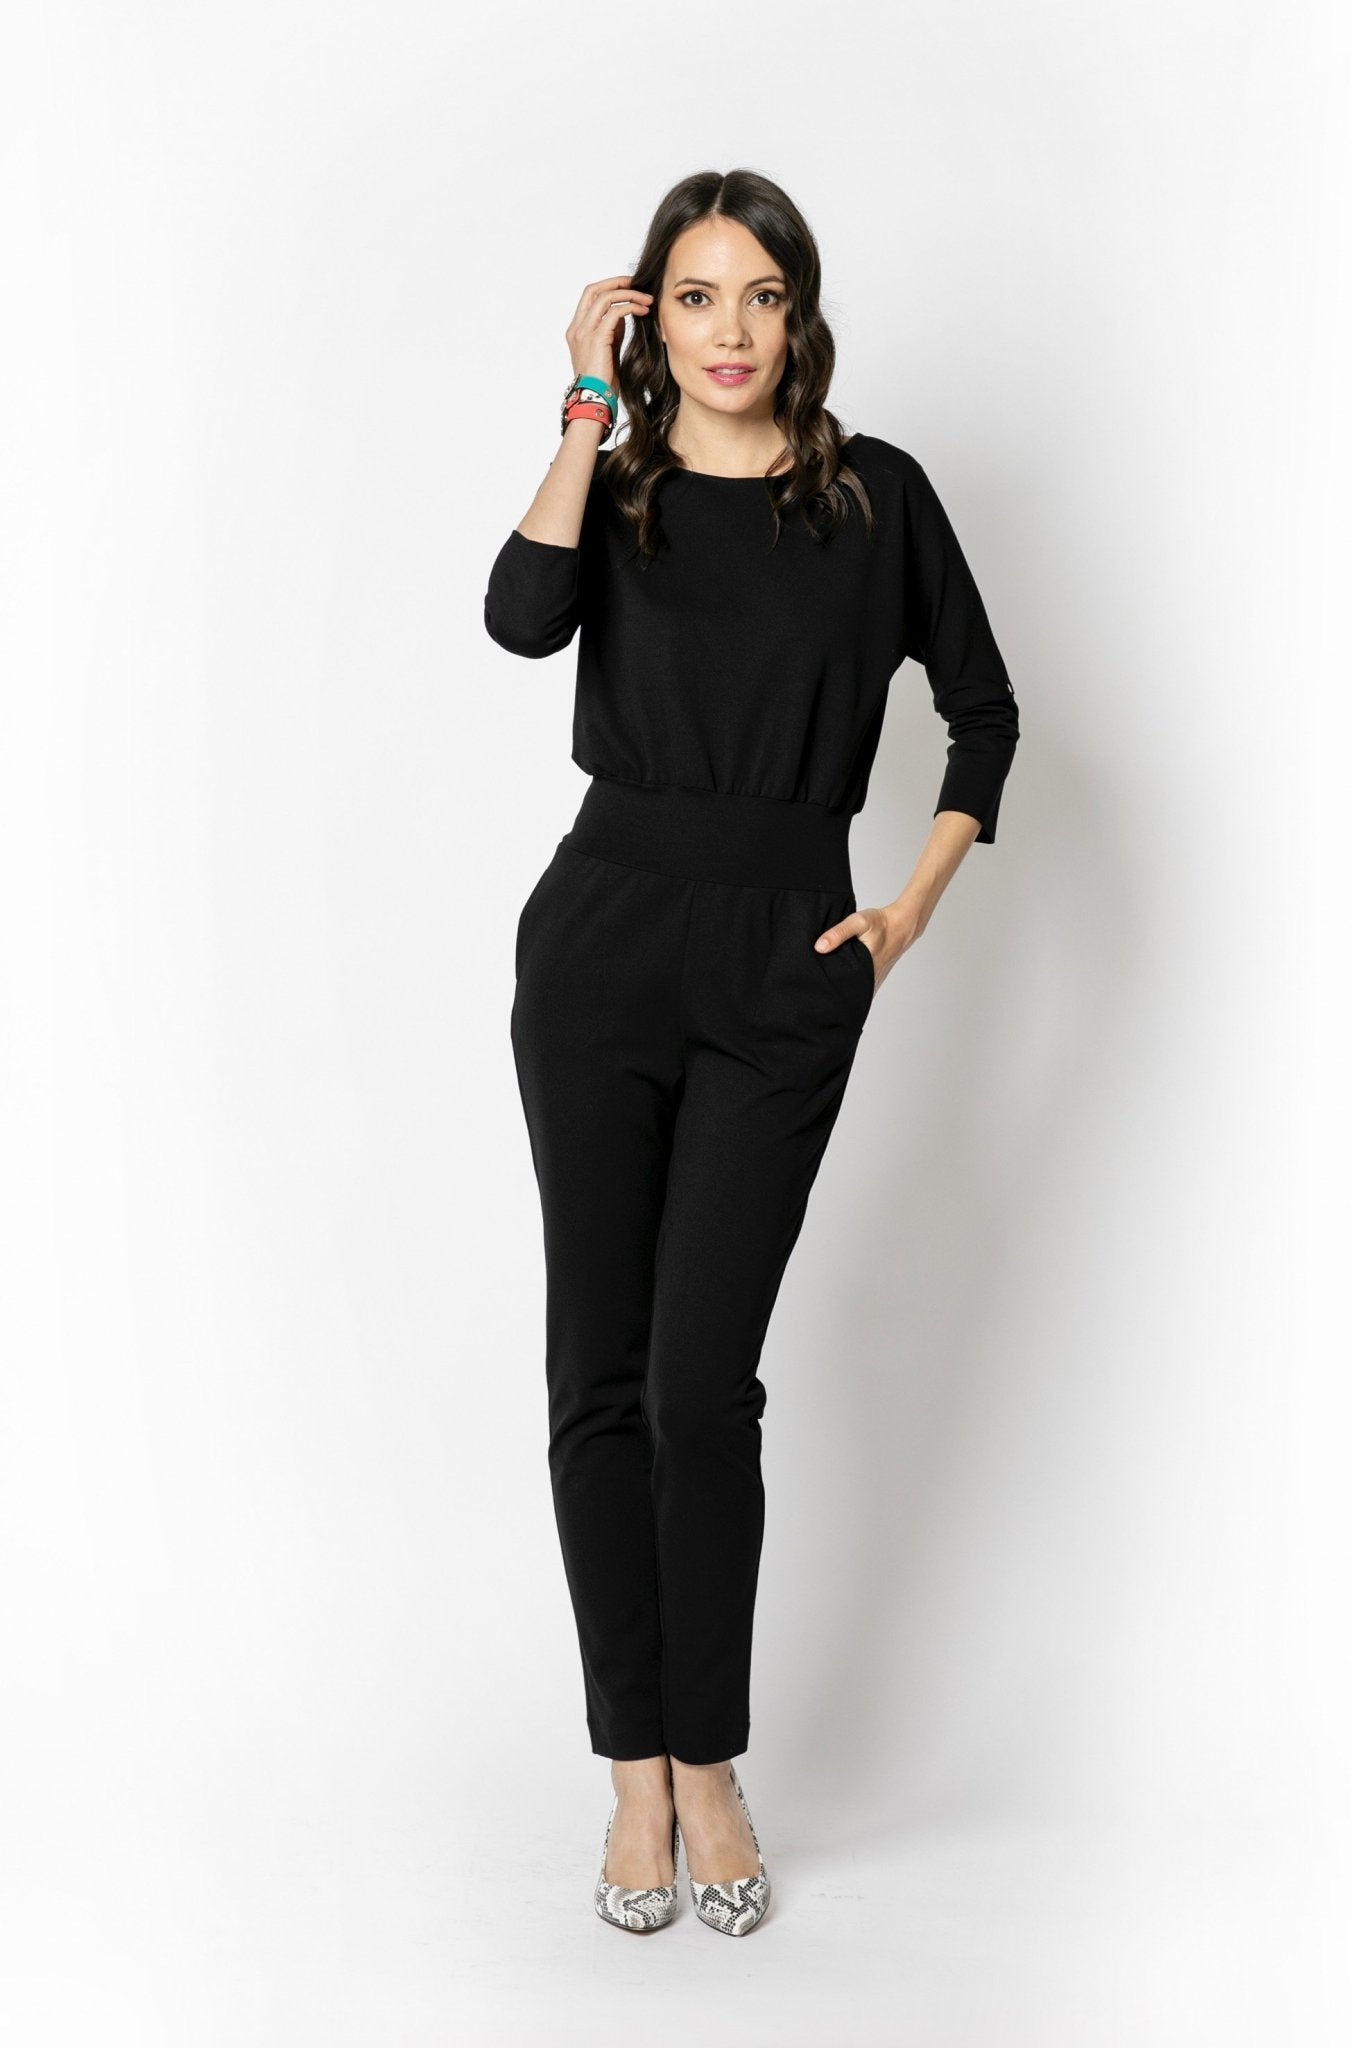 melrose-overal-konyekig-ero-ujjal-fekete-ew-essential-wardrobe-kapszularuhatar-webshop